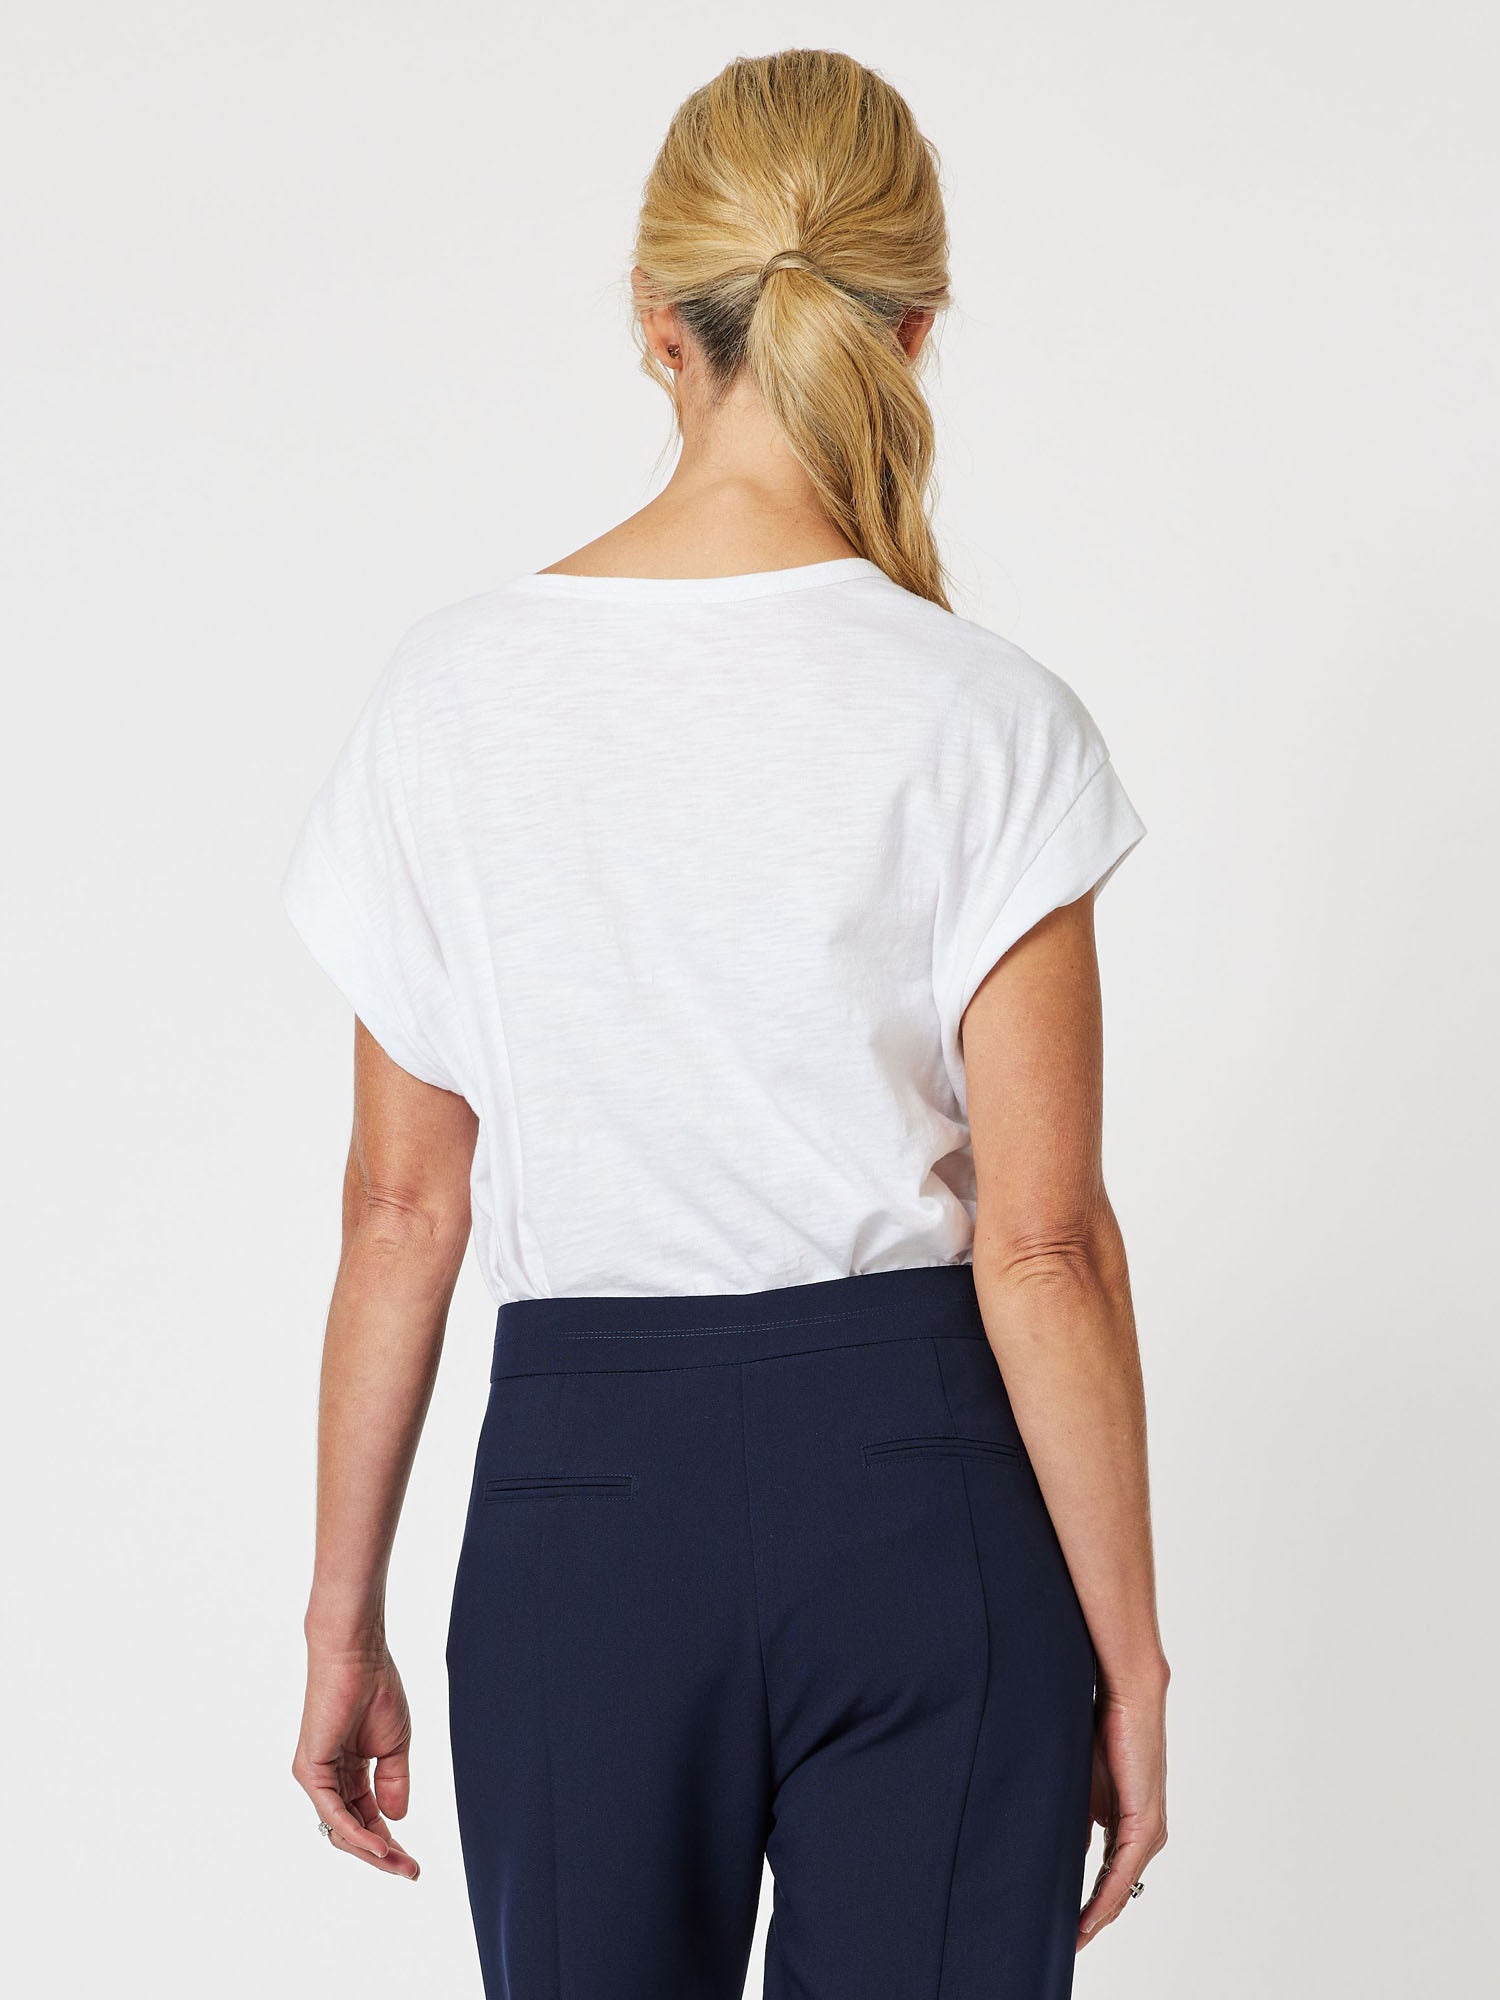 Applique Scoop Neck Short Sleeve T-Shirt - White/Navy